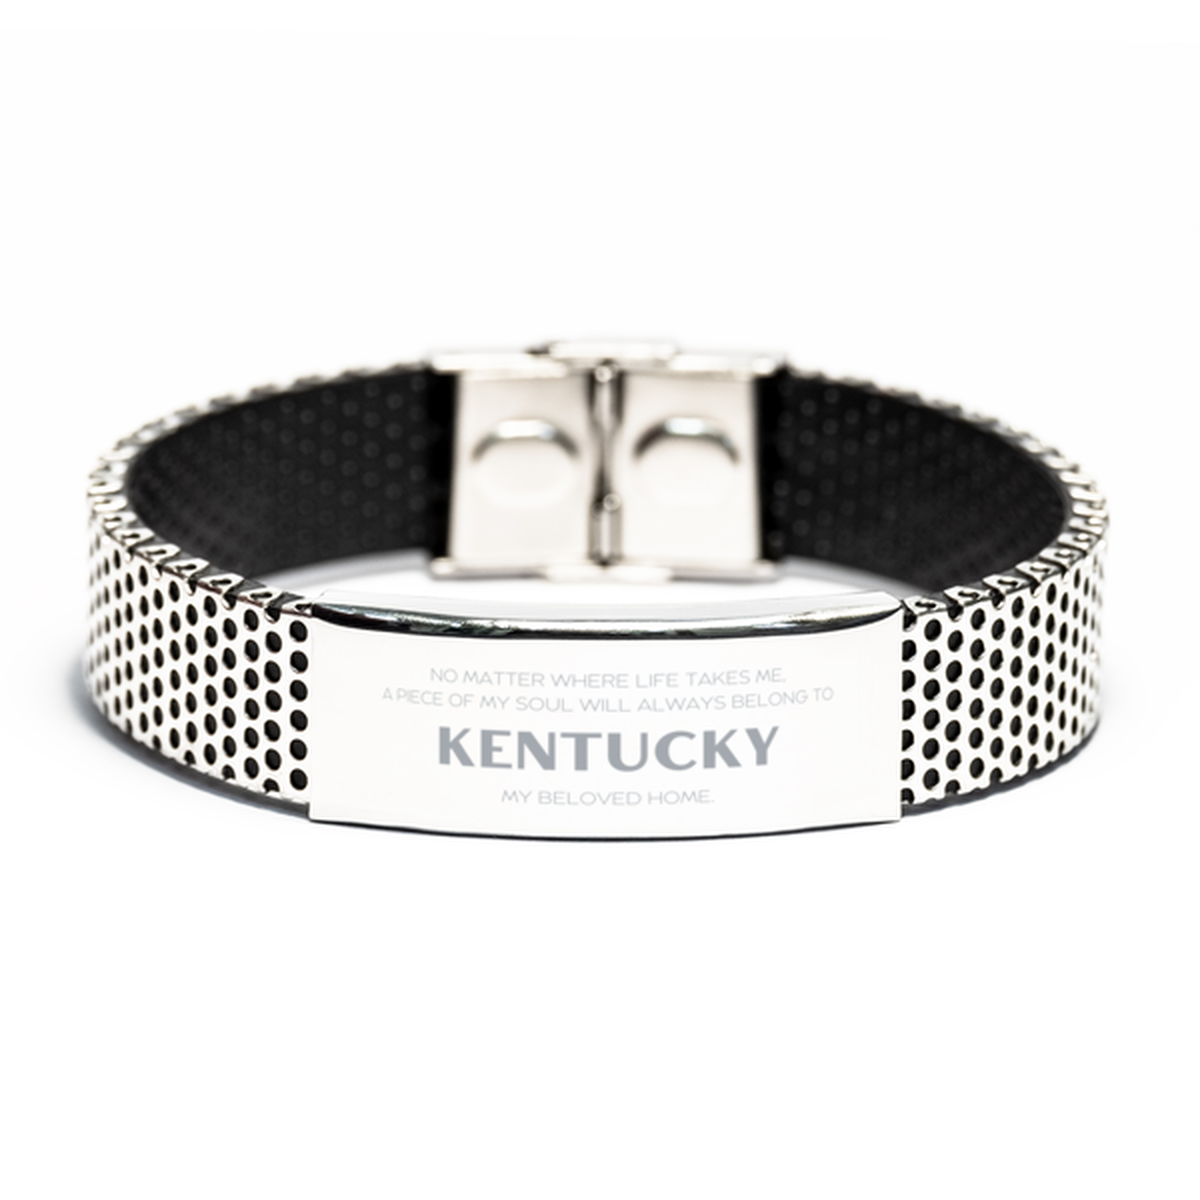 Love Kentucky State Gifts, My soul will always belong to Kentucky, Proud Stainless Steel Bracelet, Birthday Unique Gifts For Kentucky Men, Women, Friends